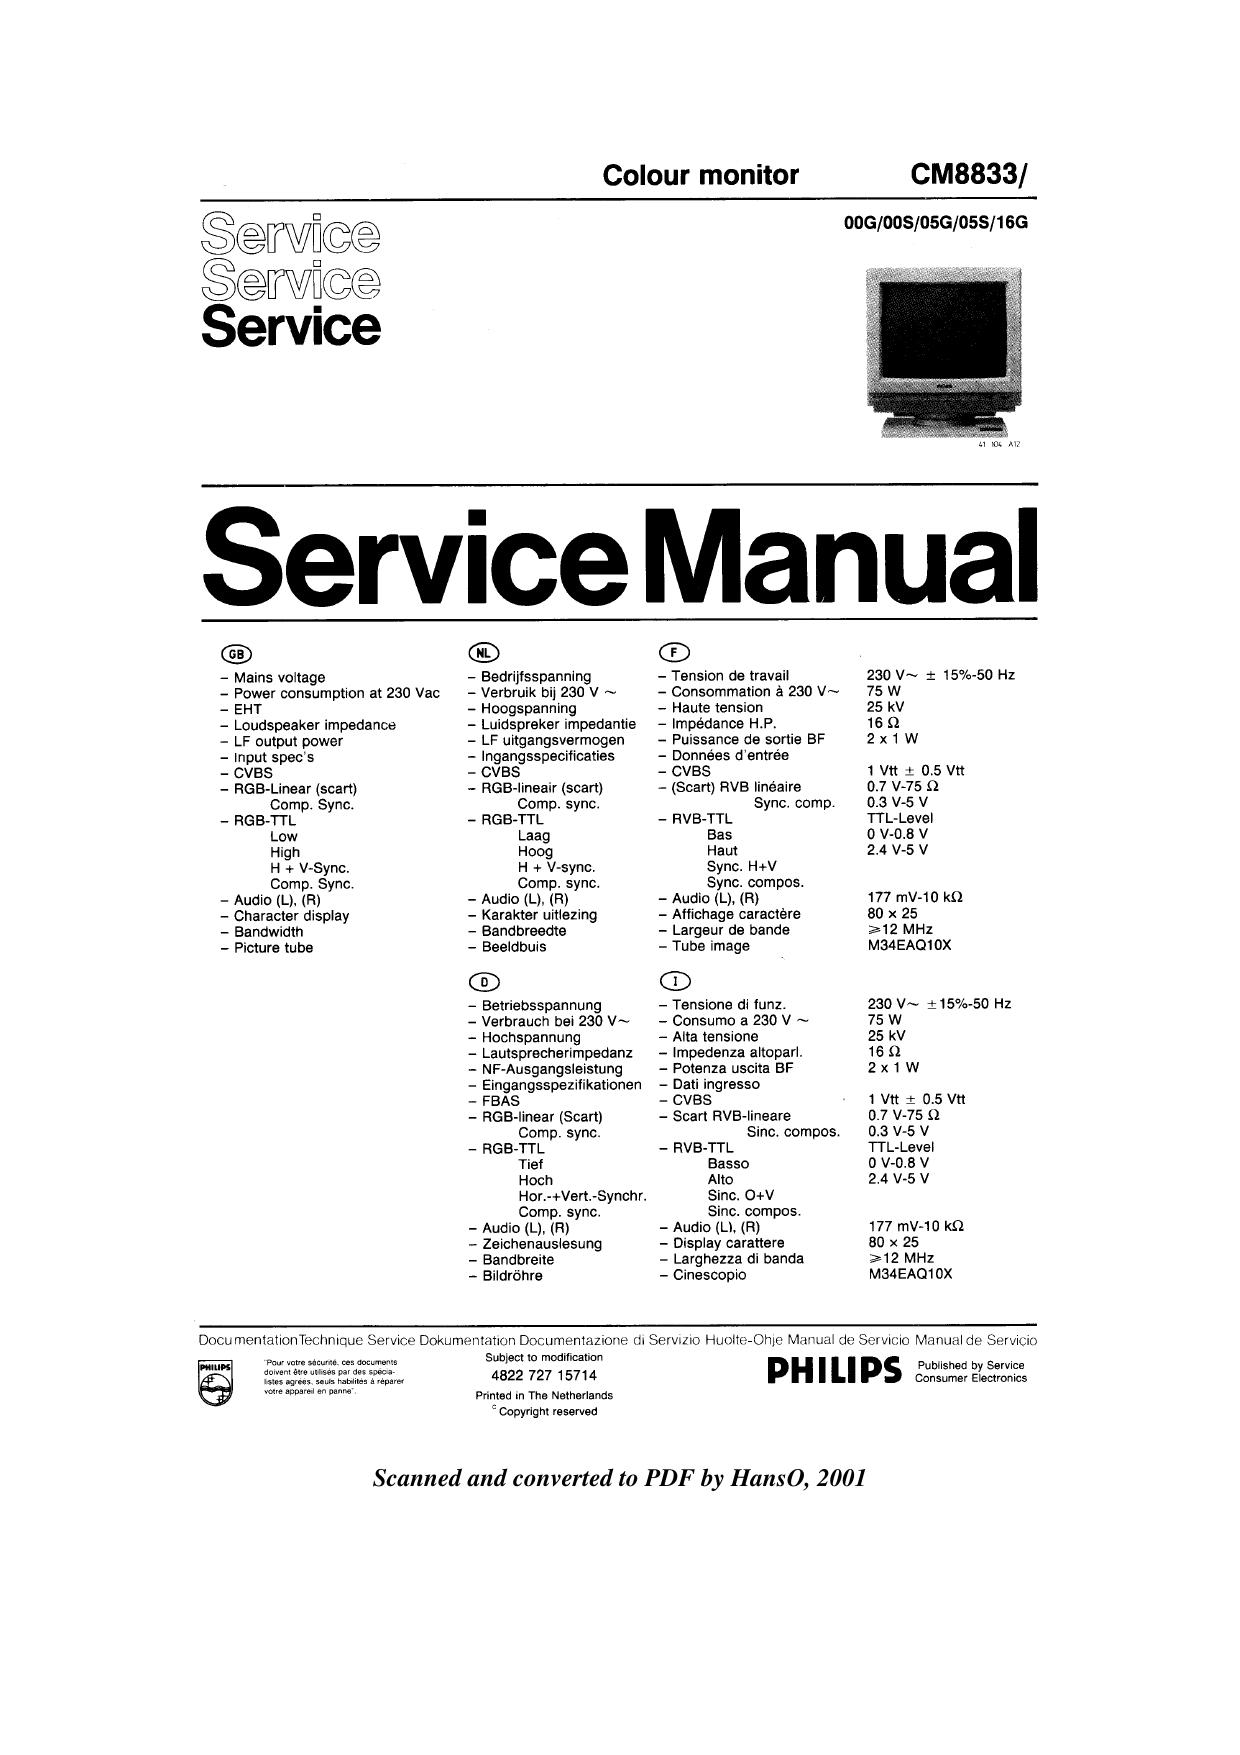 CM8833 service manual